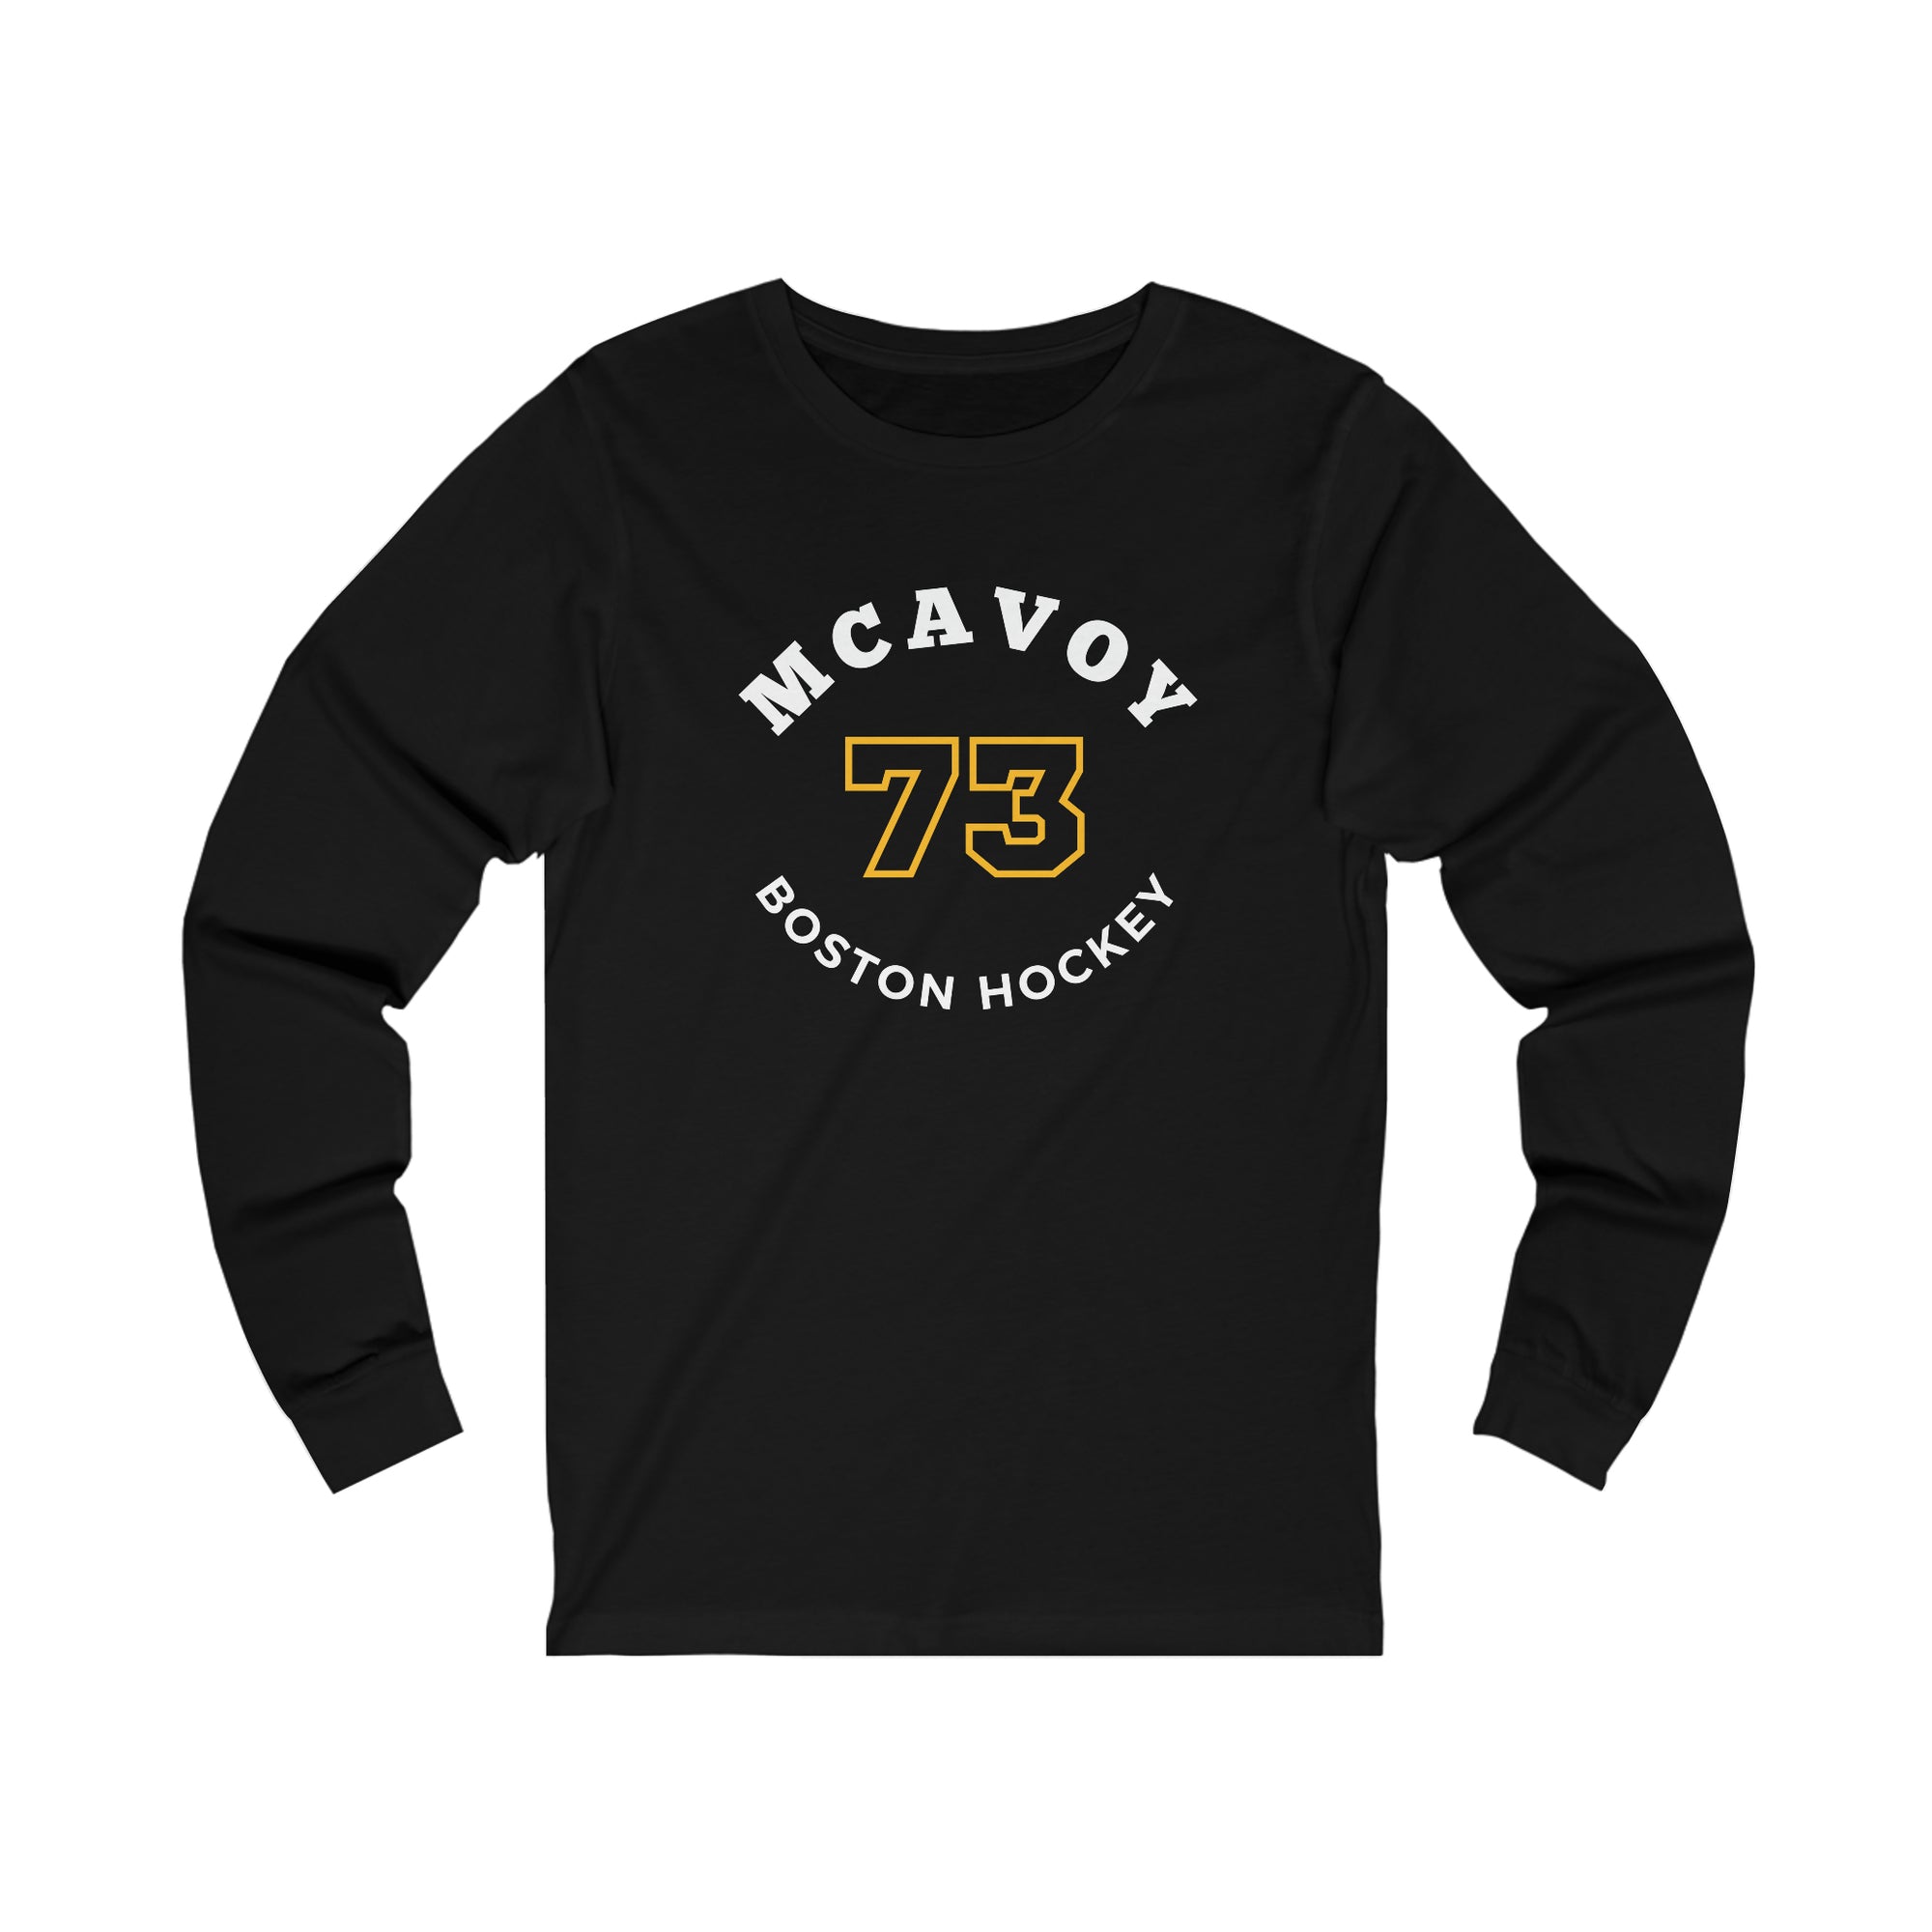 McAvoy 73 Boston Hockey Number Arch Design Unisex Jersey Long Sleeve Shirt